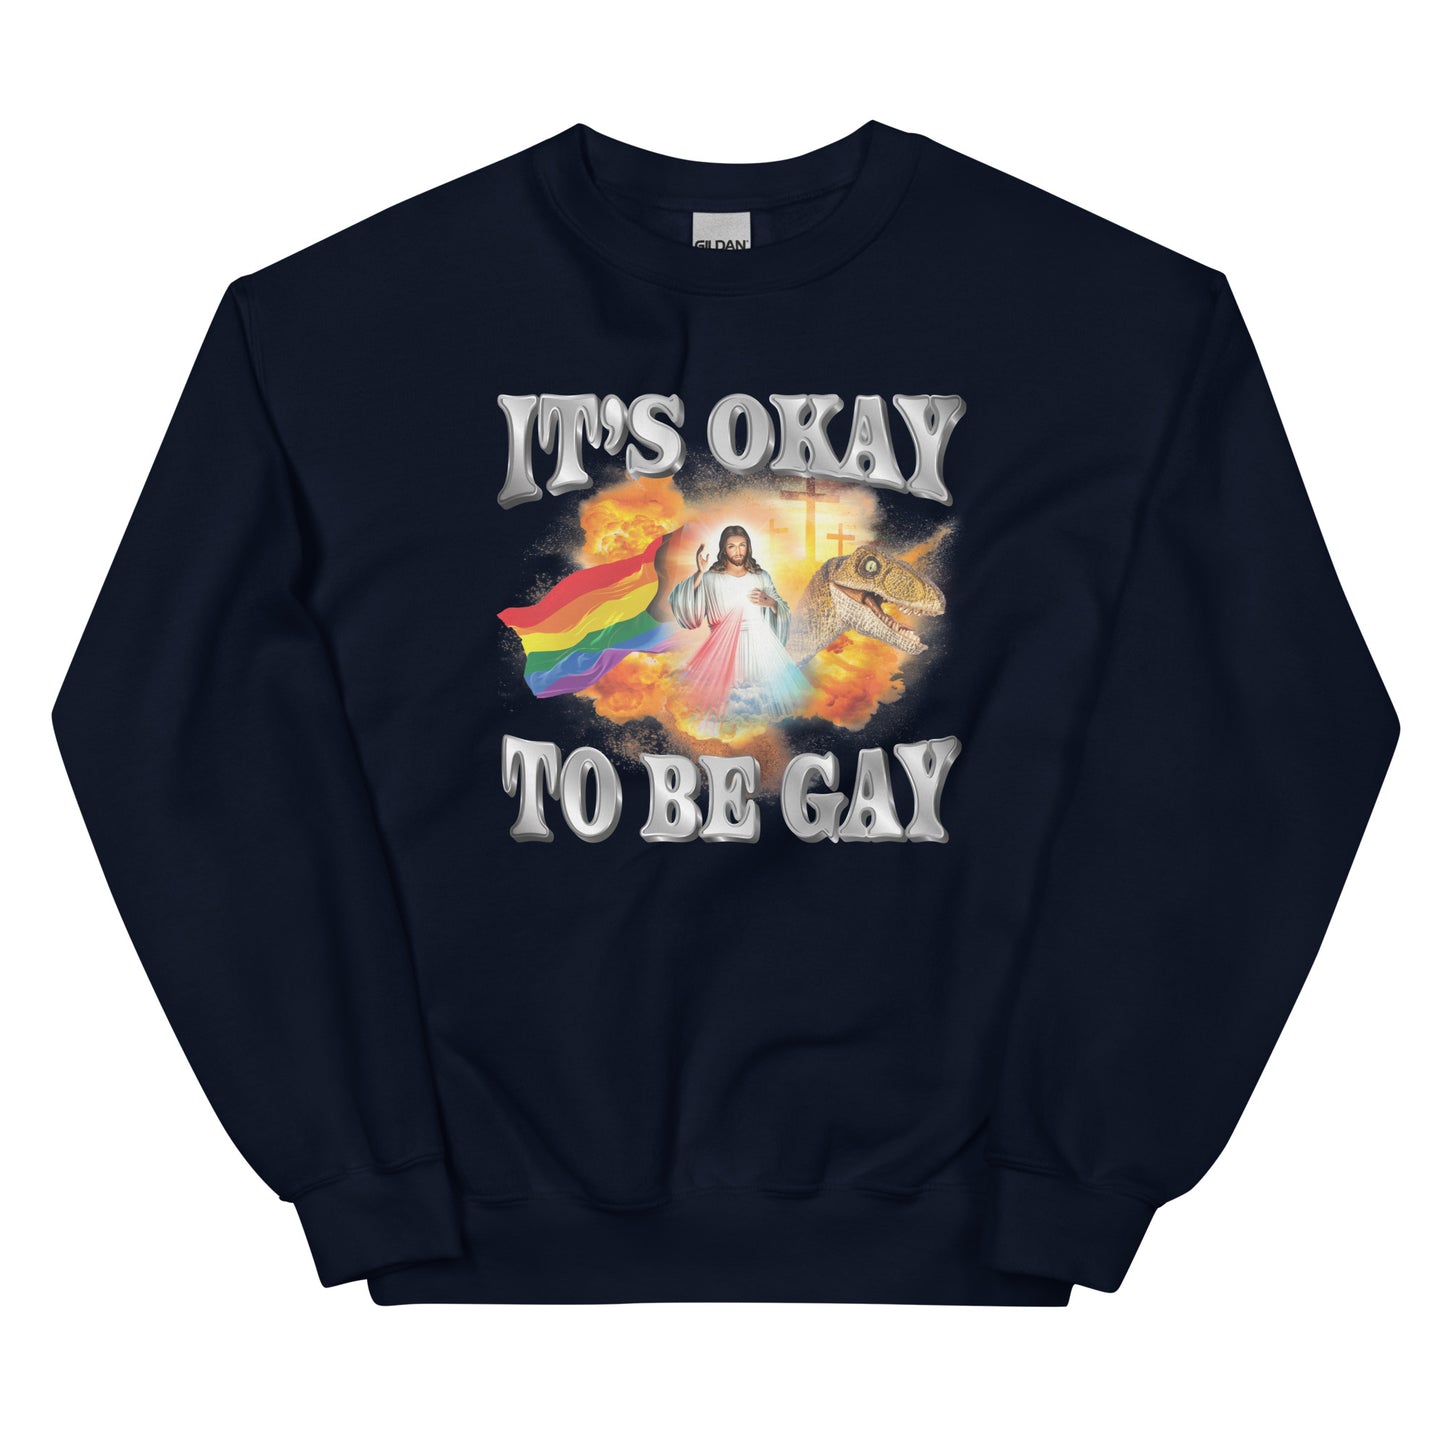 It's Okay to be Gay (Jesus) Unisex Sweatshirt